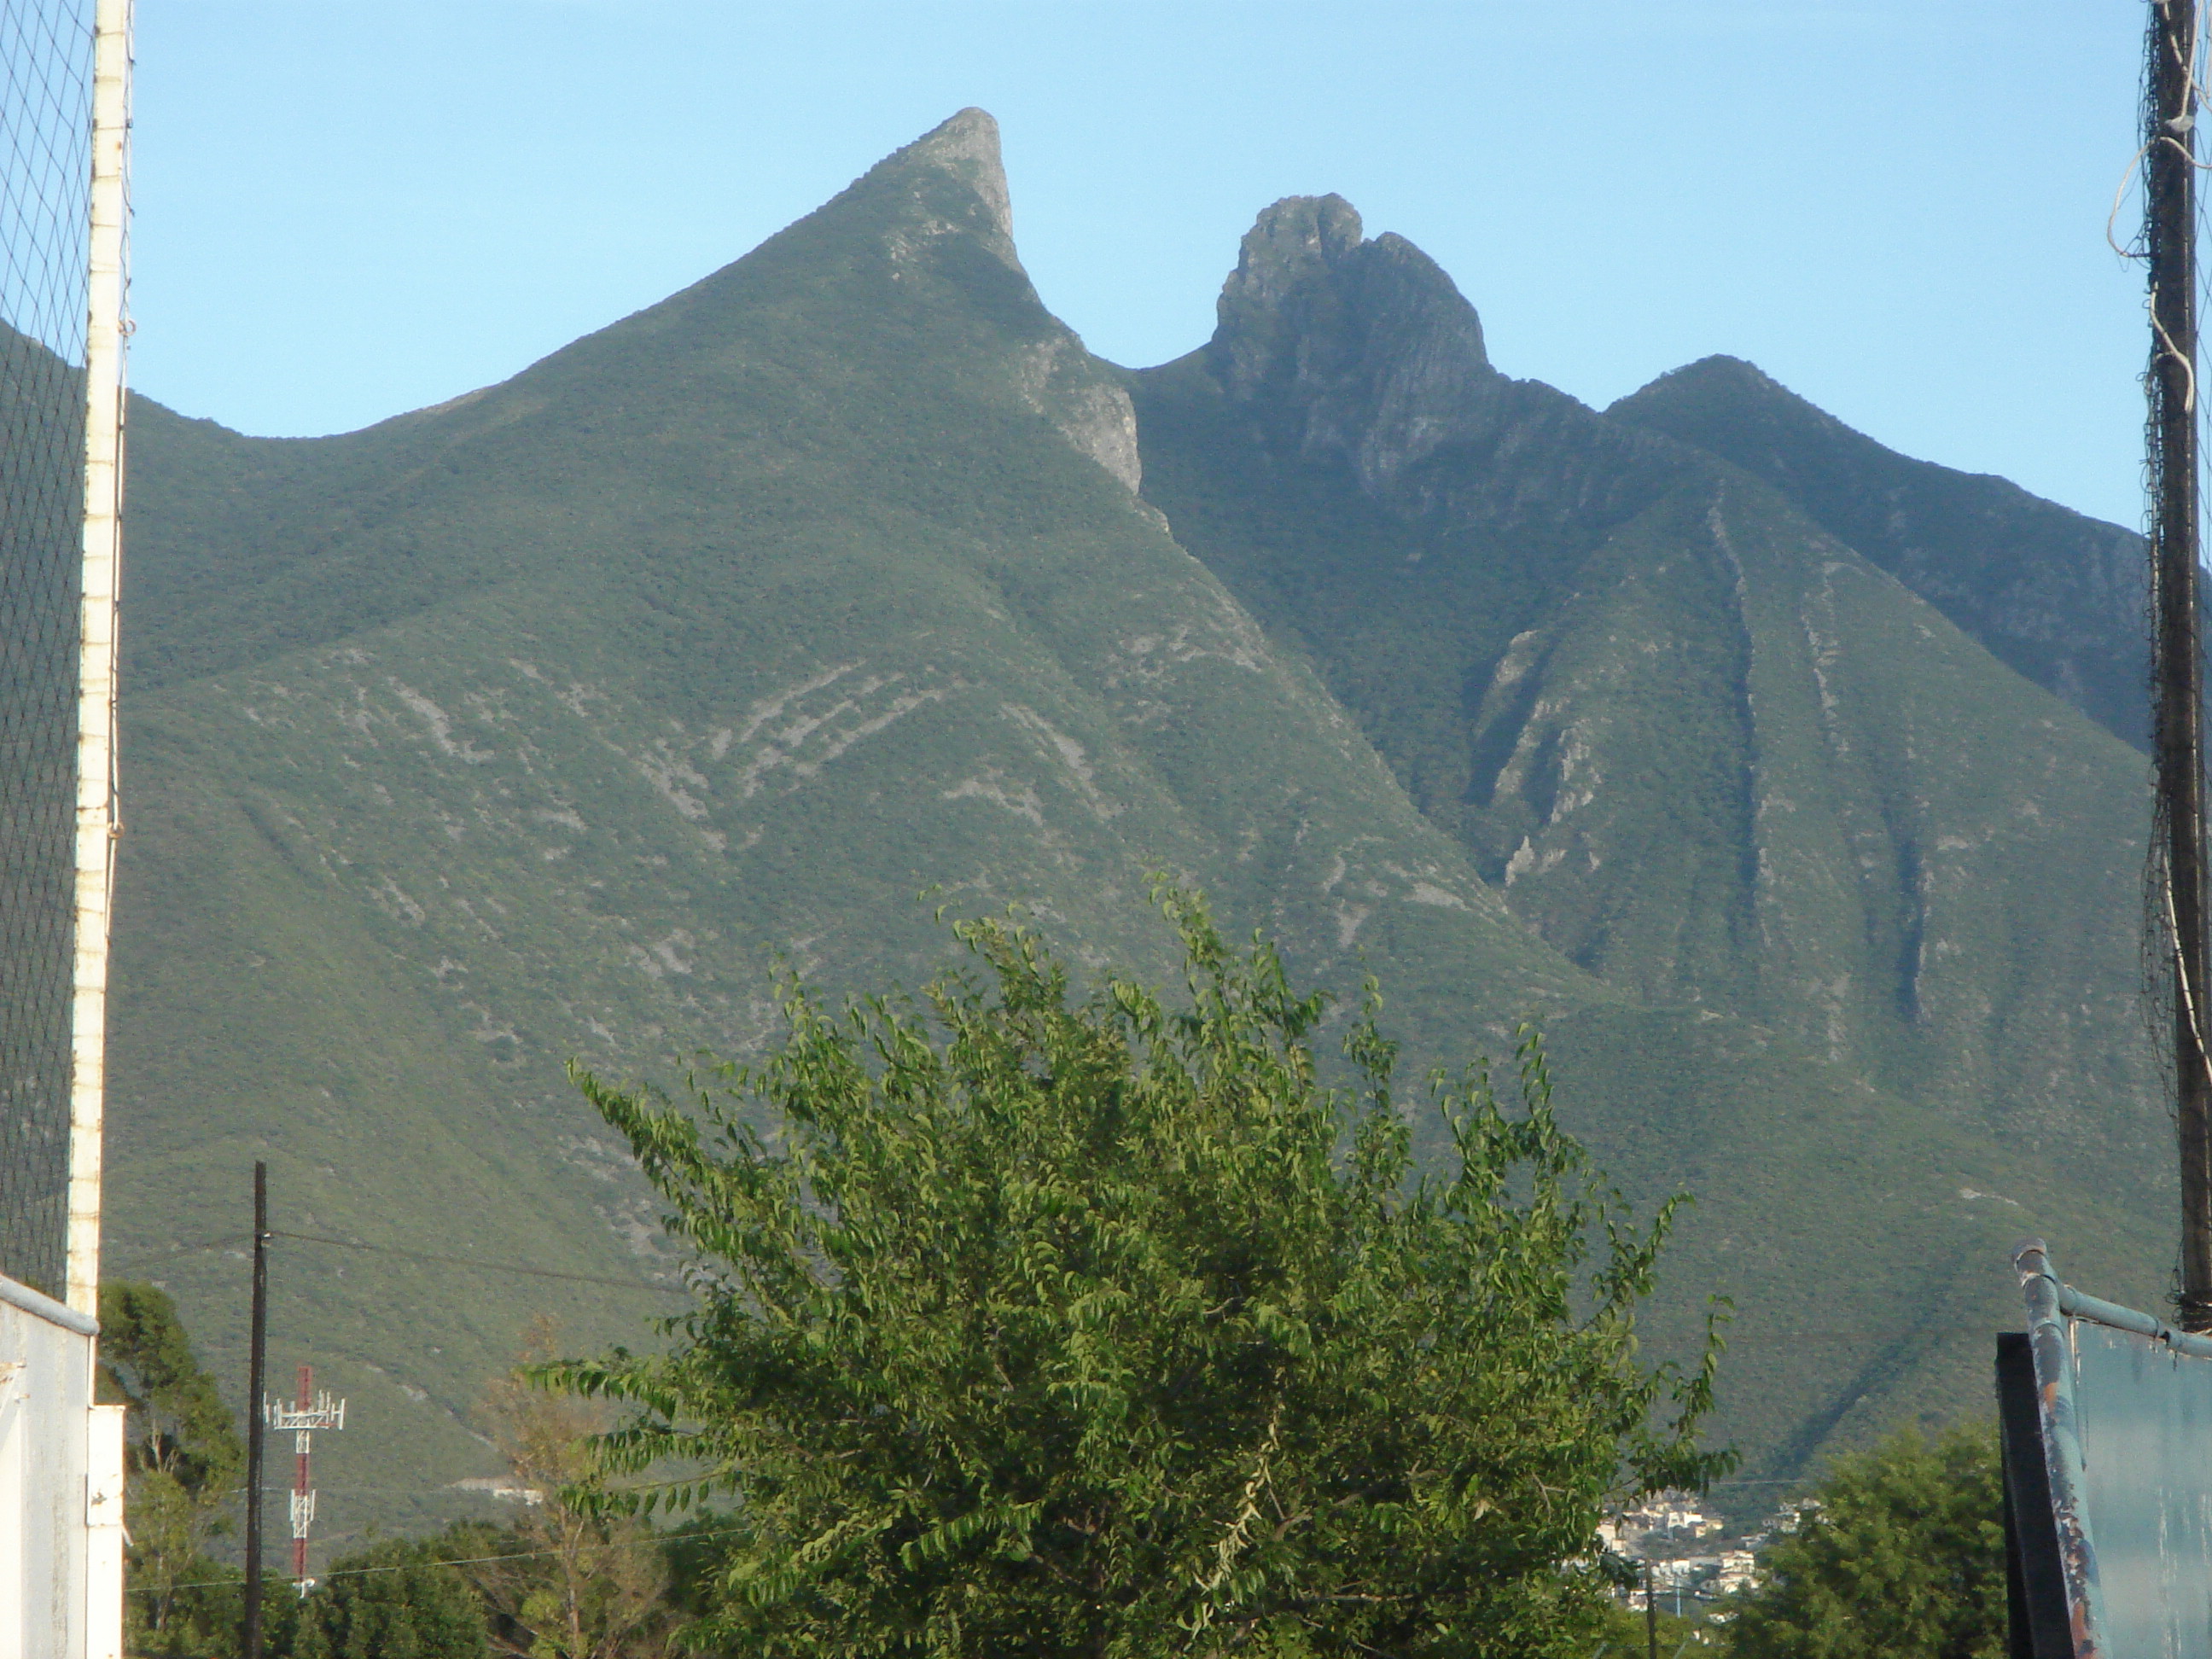 Cerro de la Silla (mountain)